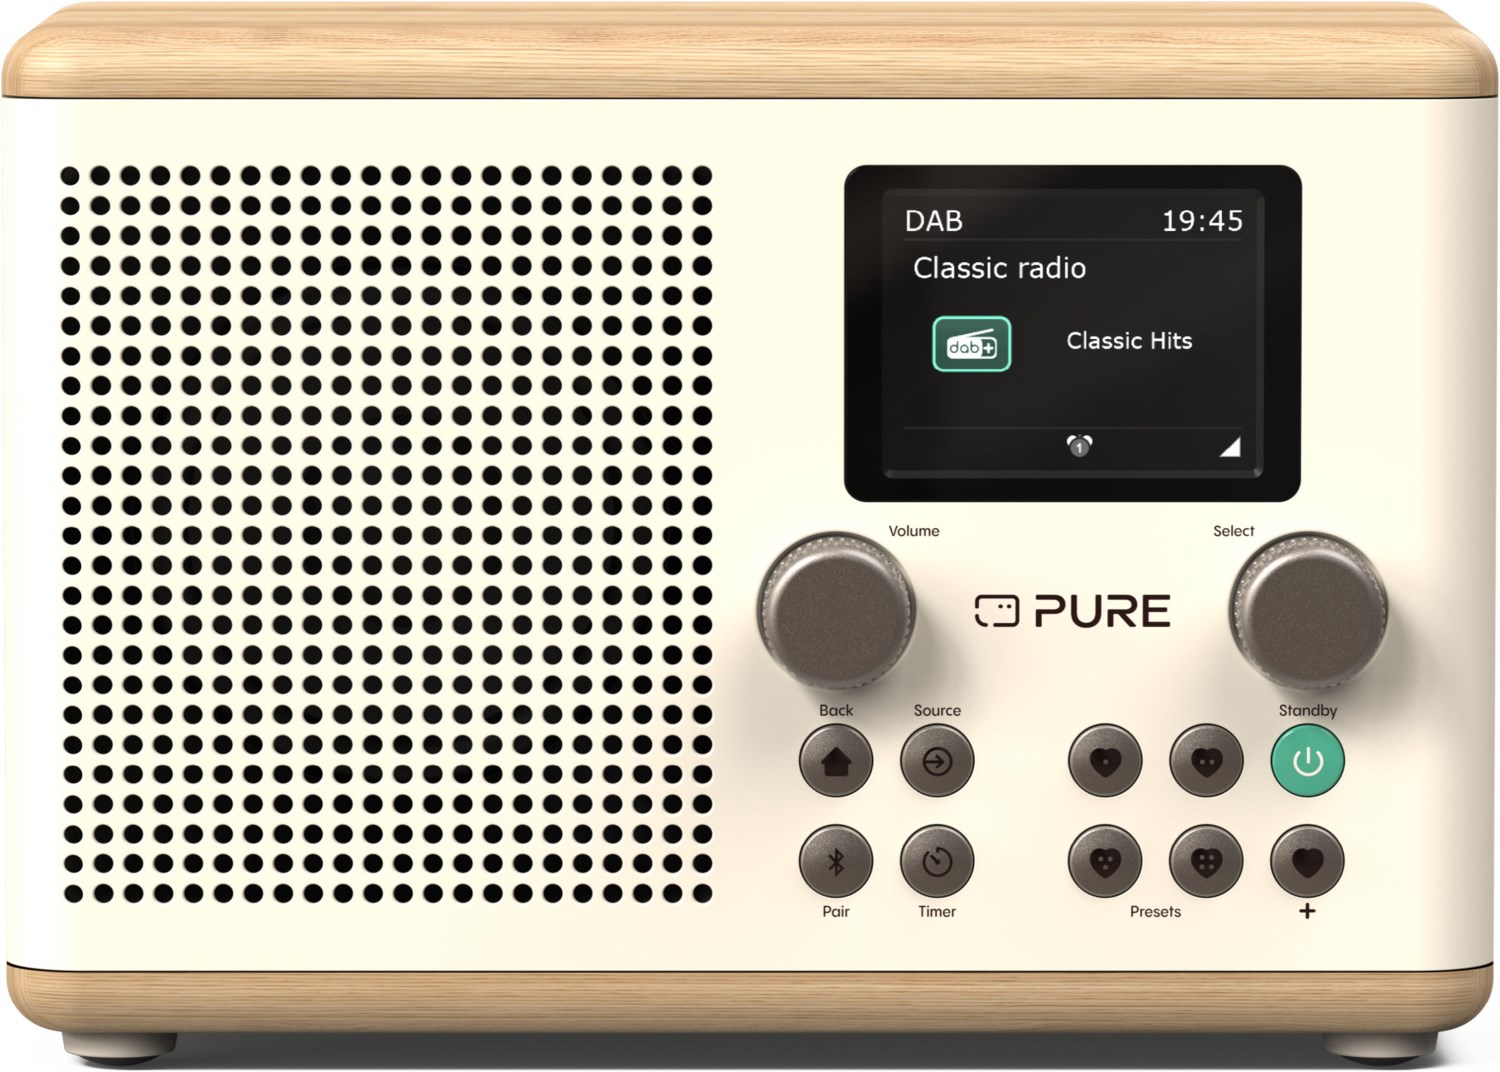 Pure Classic H4 Digitales Küchenradio DAB+ FM Bluetooth white/oak